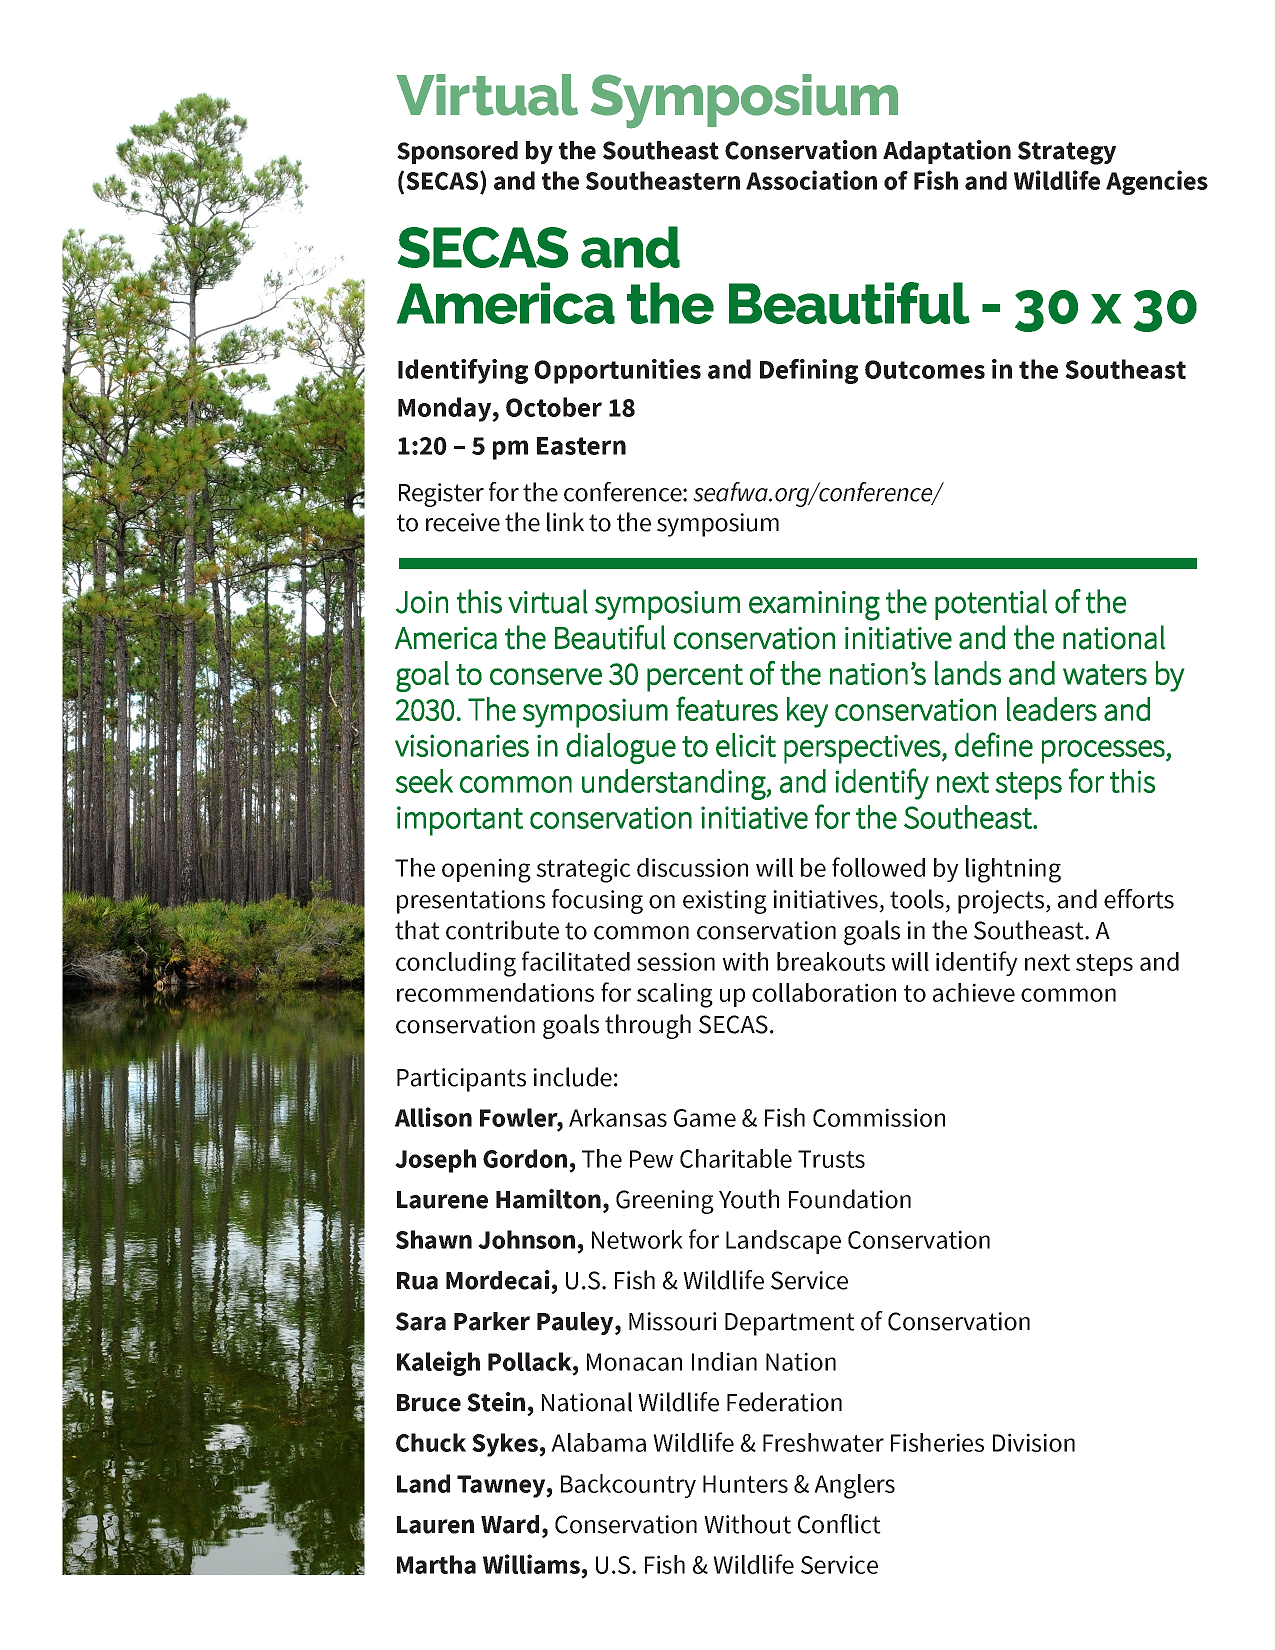 Flyer advertising upcoming SECAS symposium at SEAFWA.